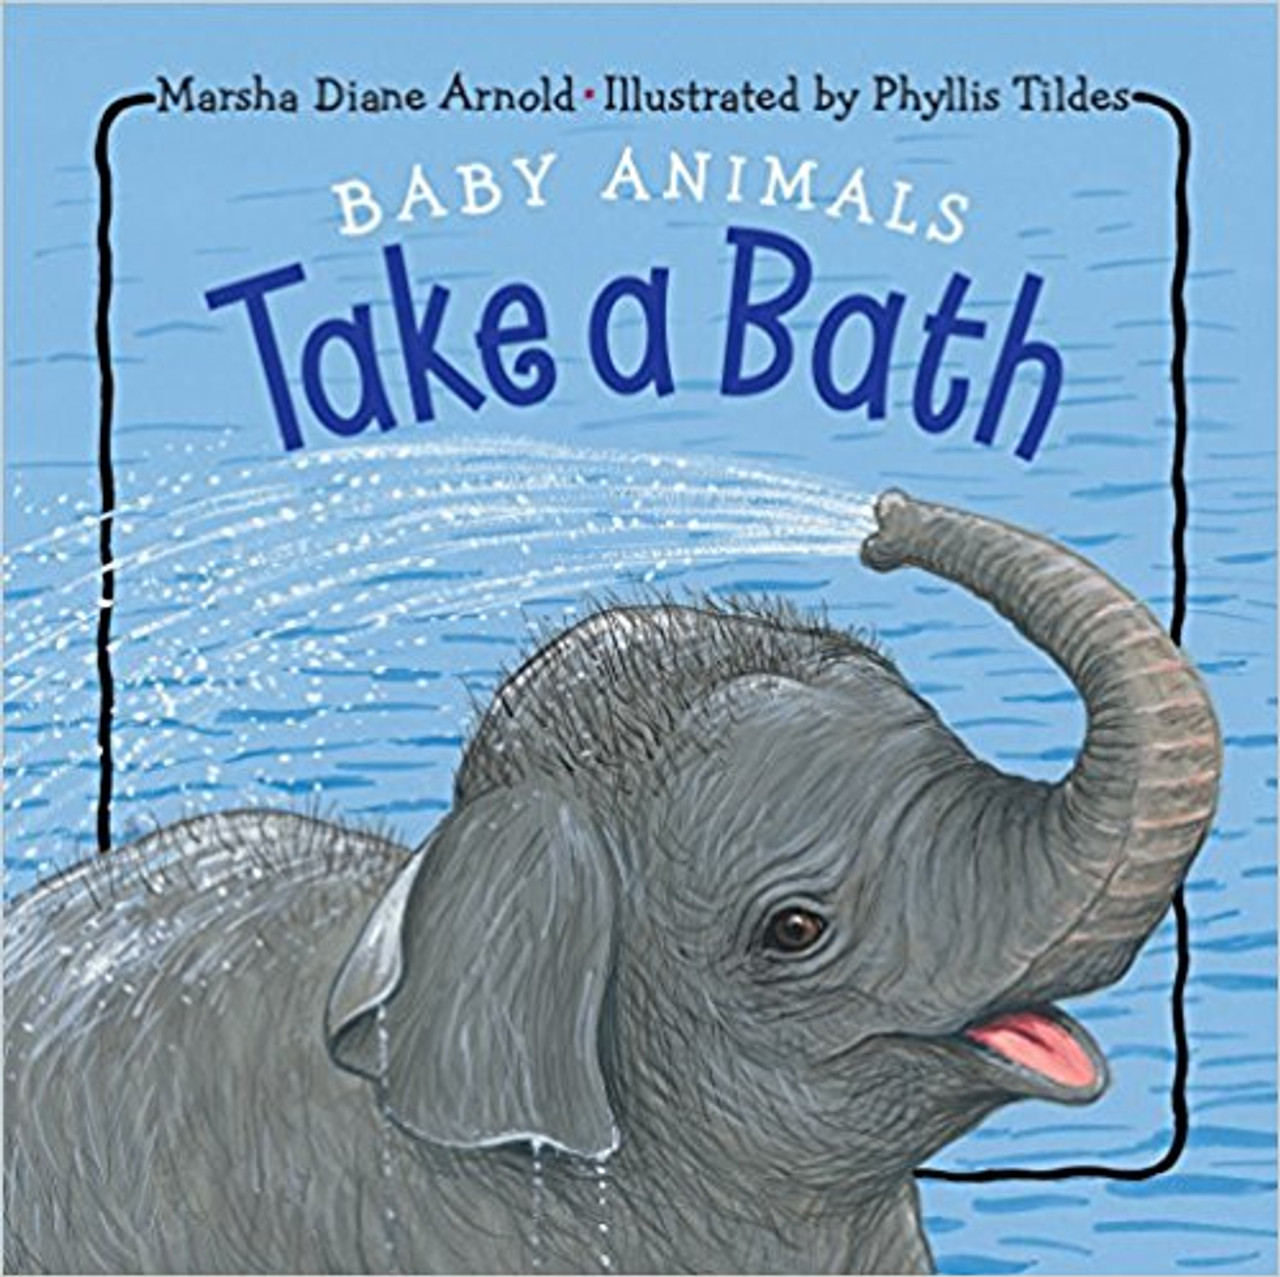 Baby Animals Take a Bath by Marsha Diane Arnold